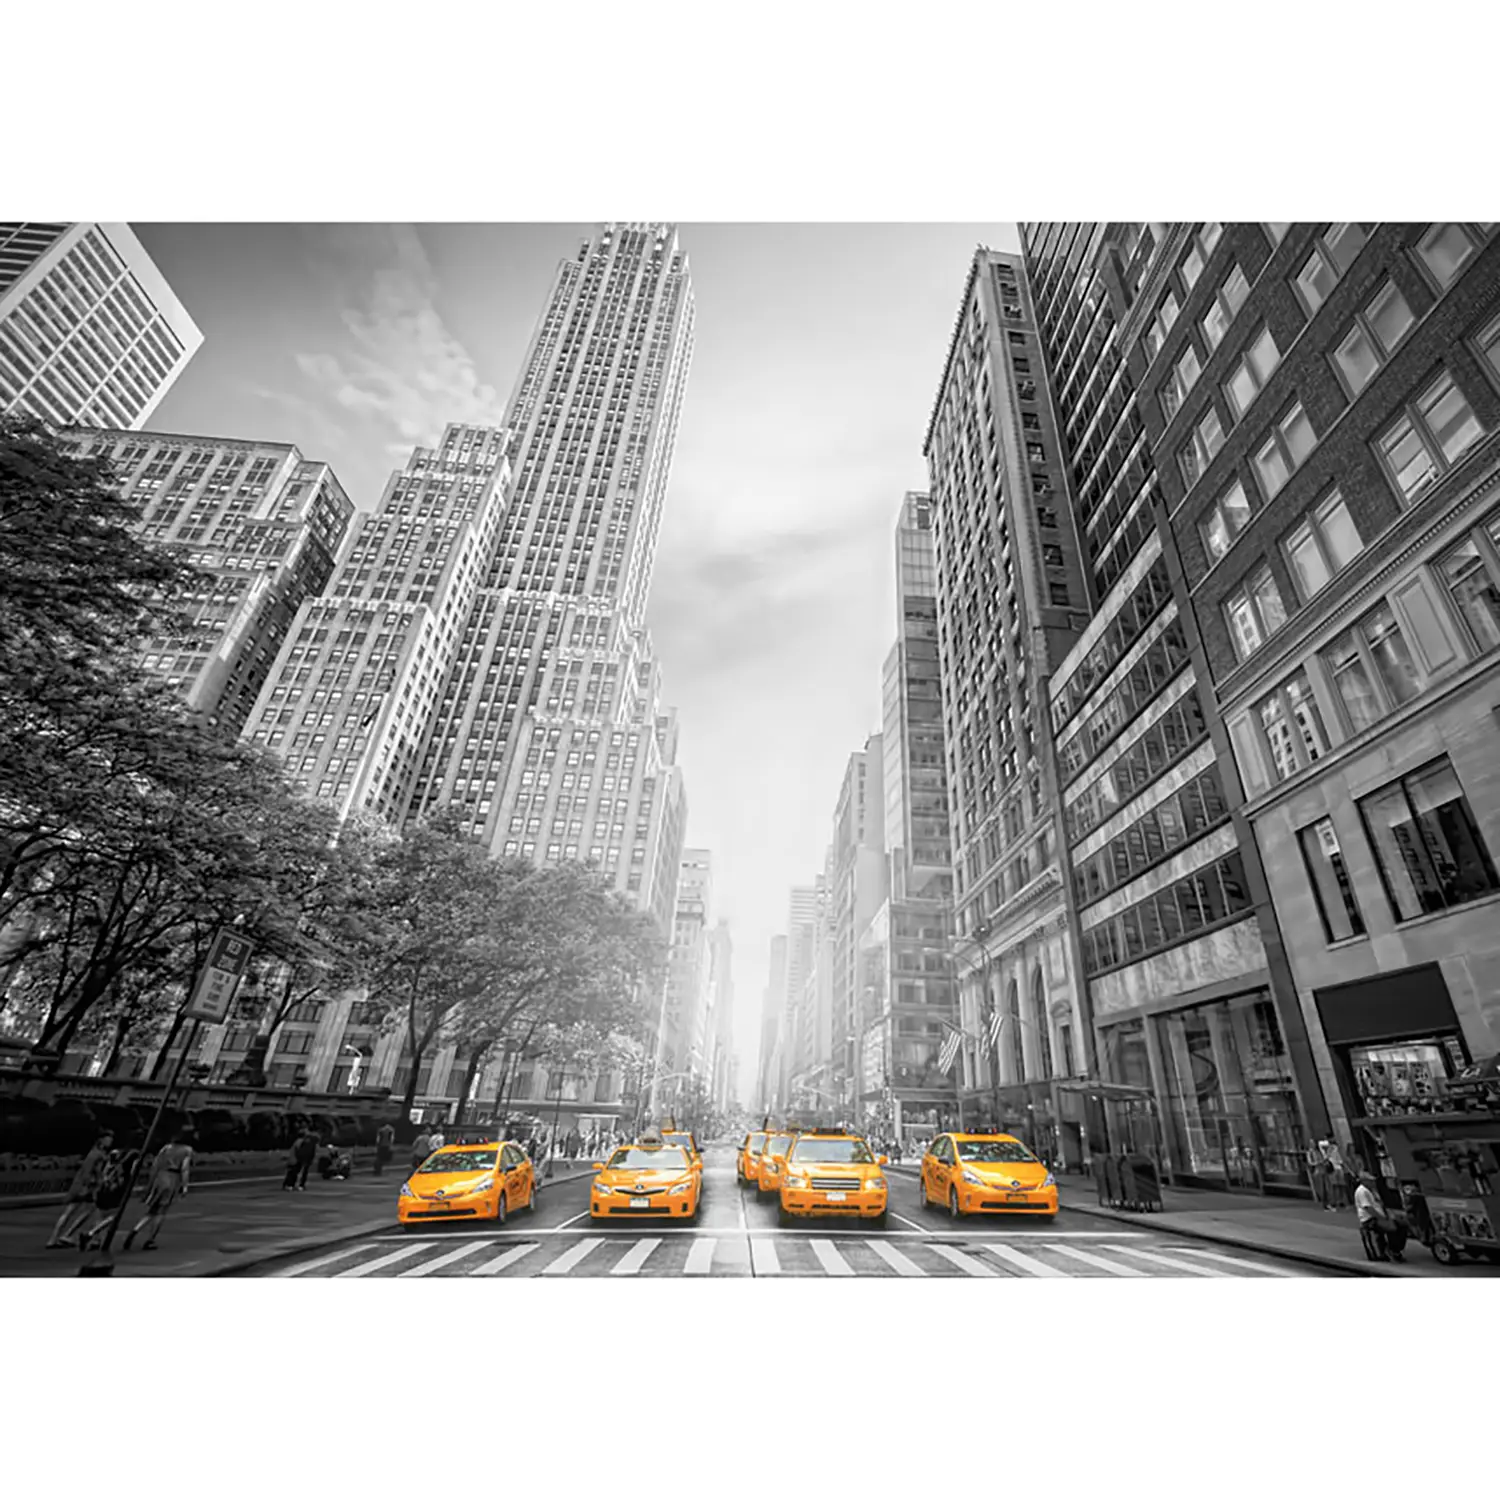 New York Taxis Fototapete Vlies